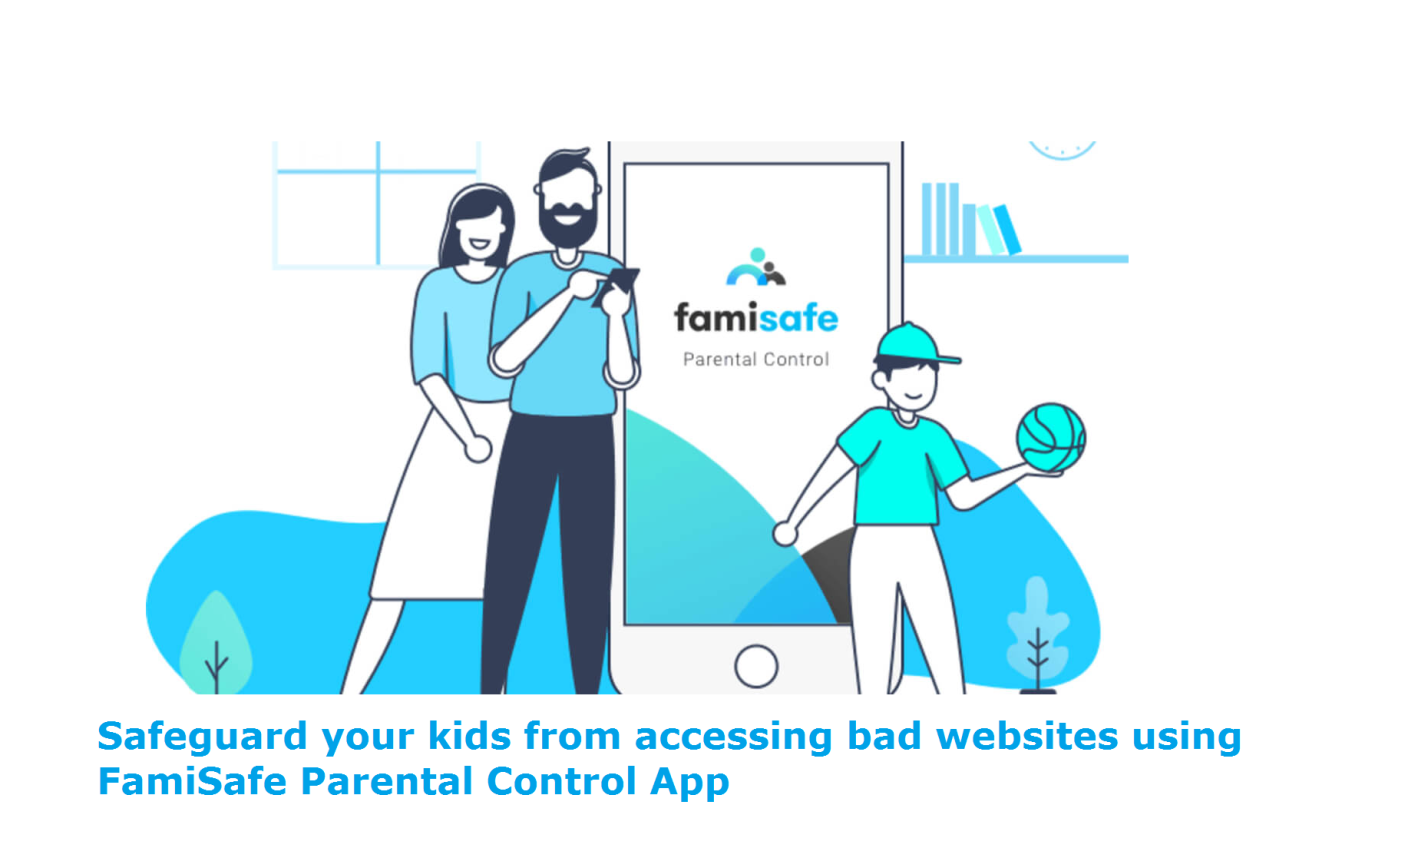 Safeguard your kids from accessing bad websites using FamiSafe Parental Control App